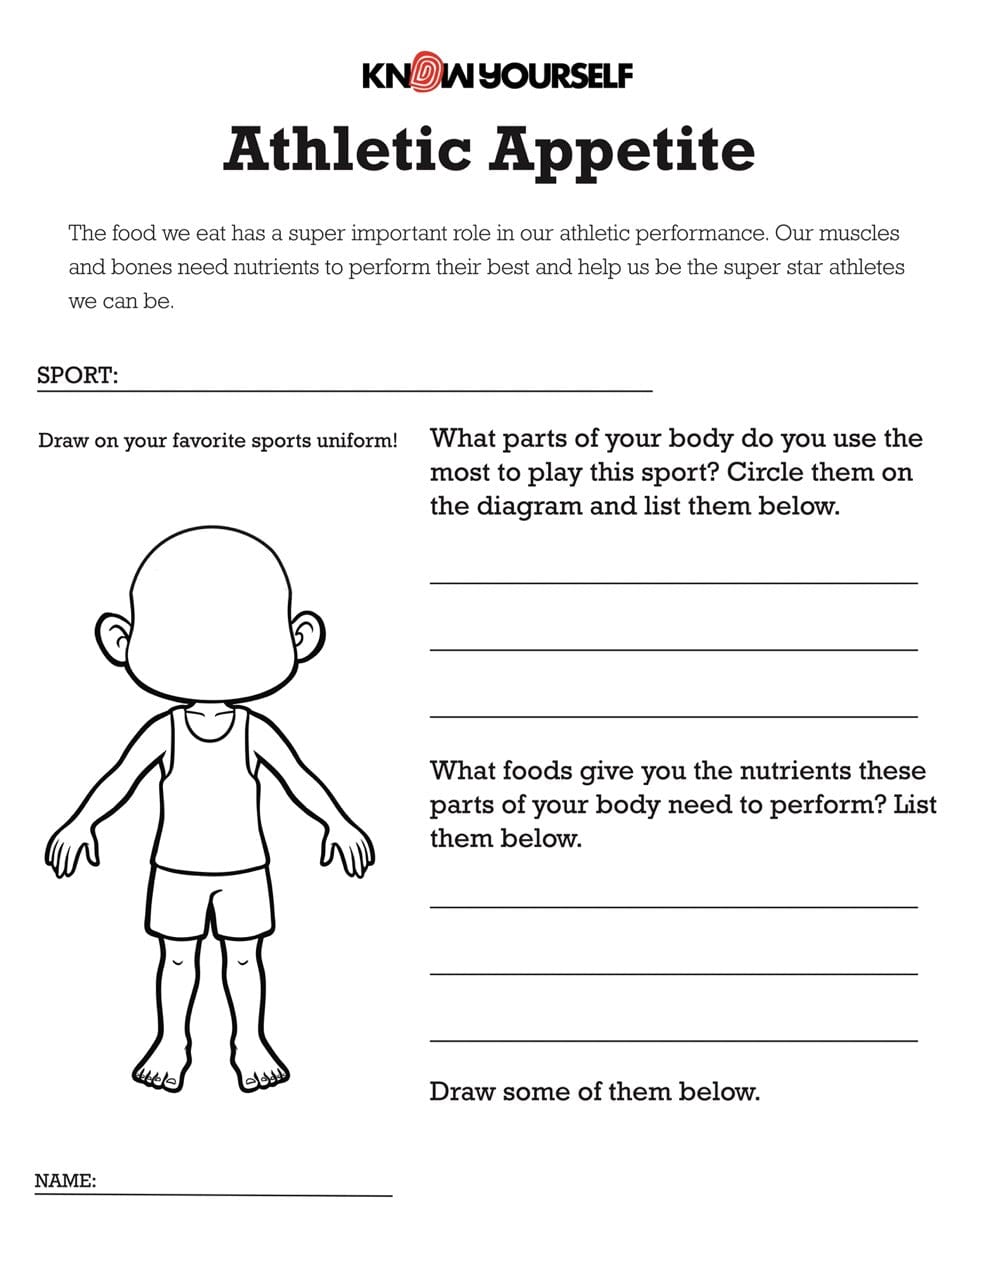 Athletic Appetite Activity Health Education for Children